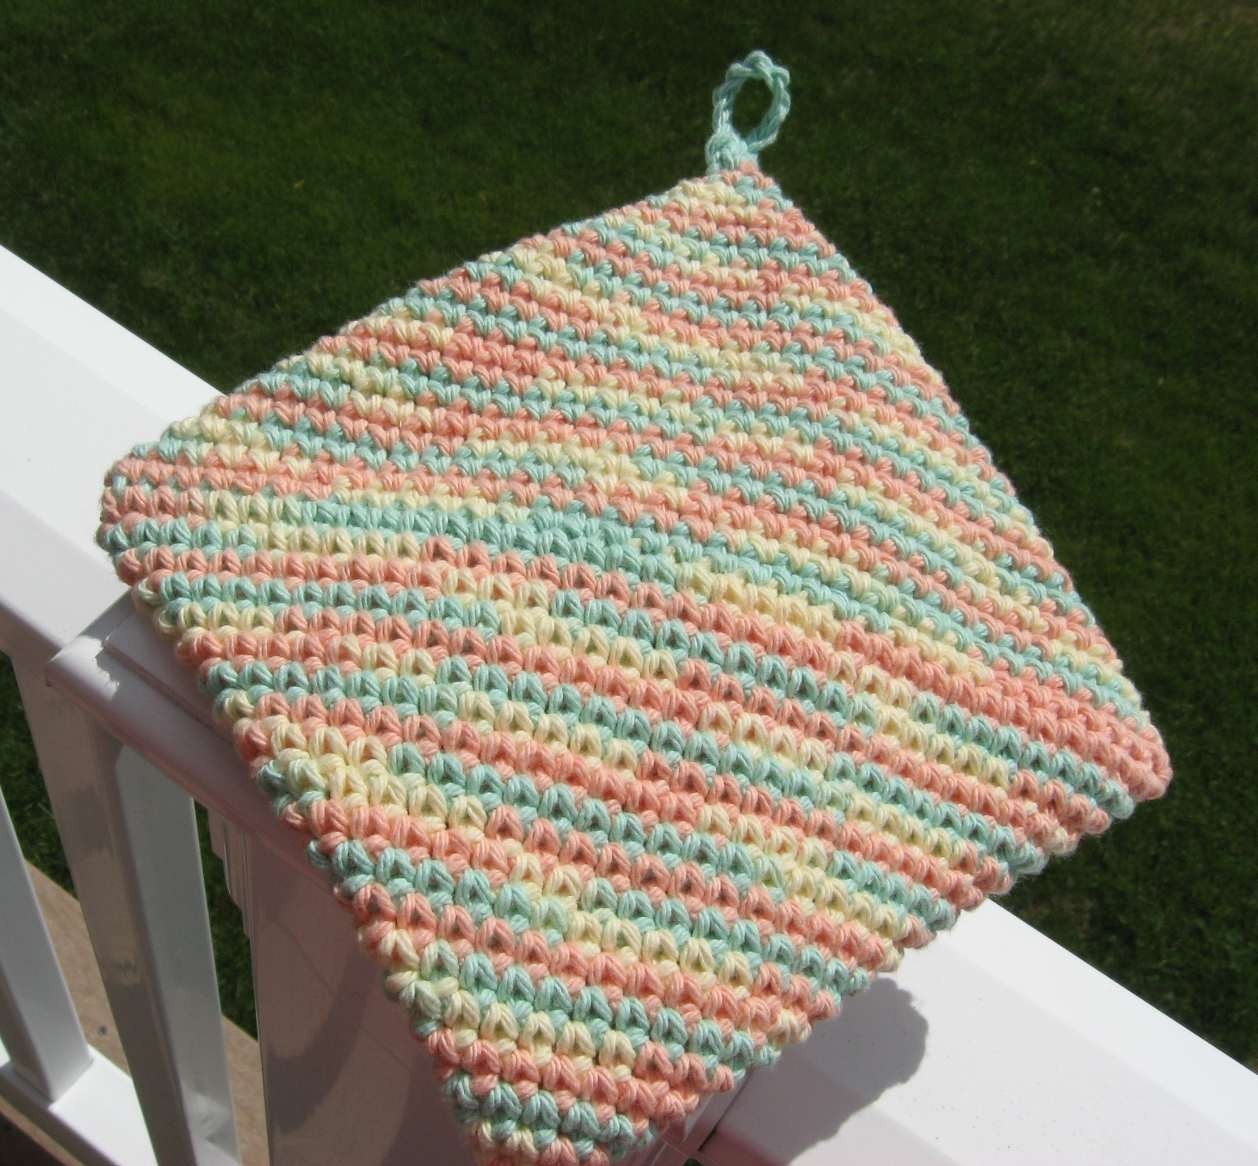 Crocheted Cotton Hotpad/Potholder